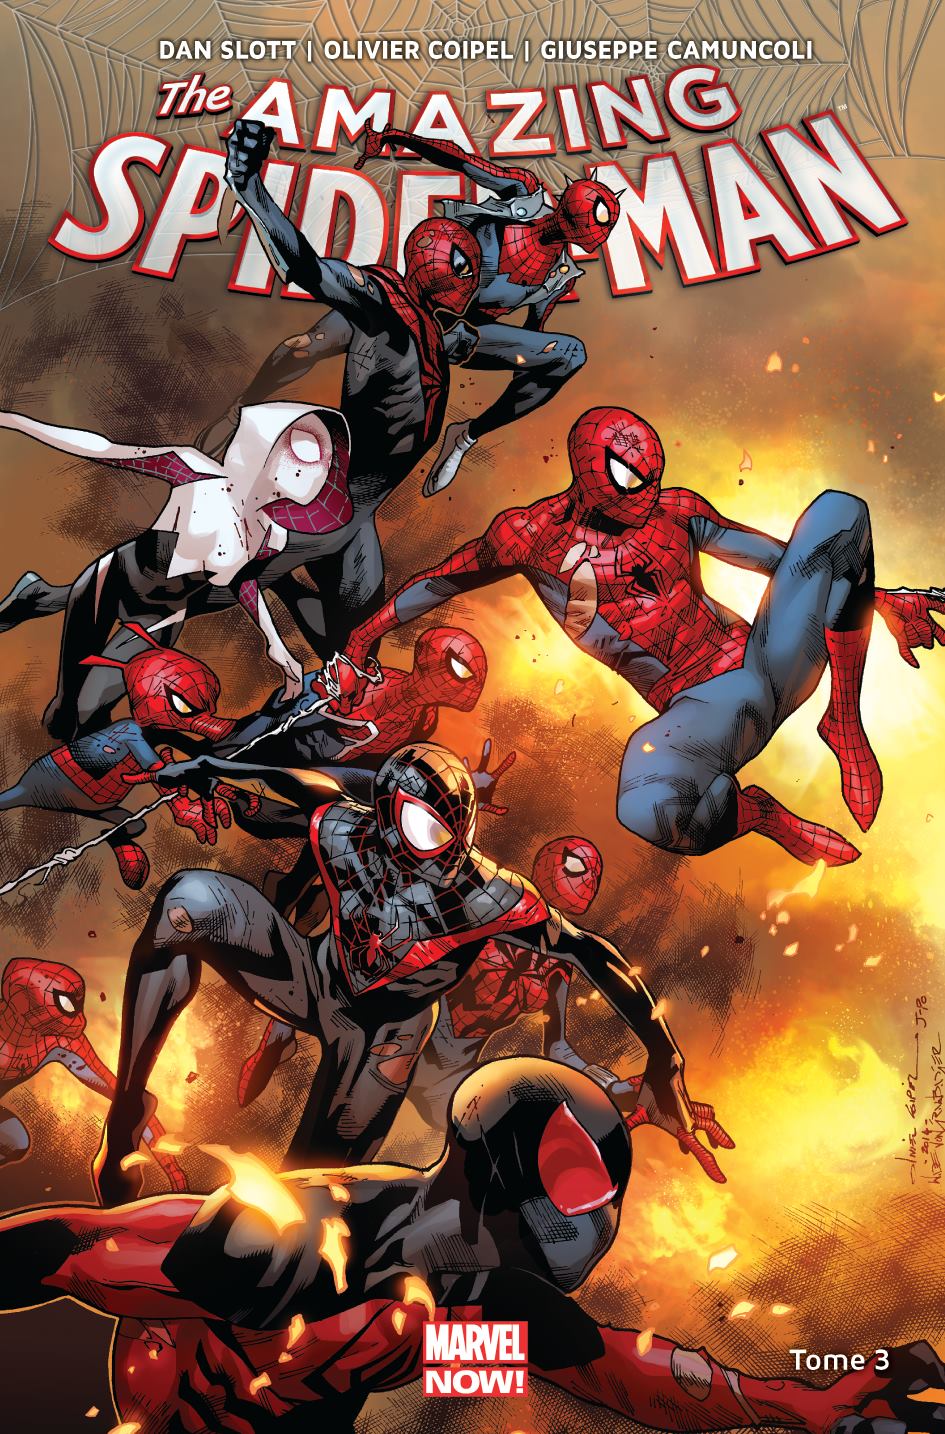 Marvel Spider-Man Spidey Man et ses amis magiques, déformation